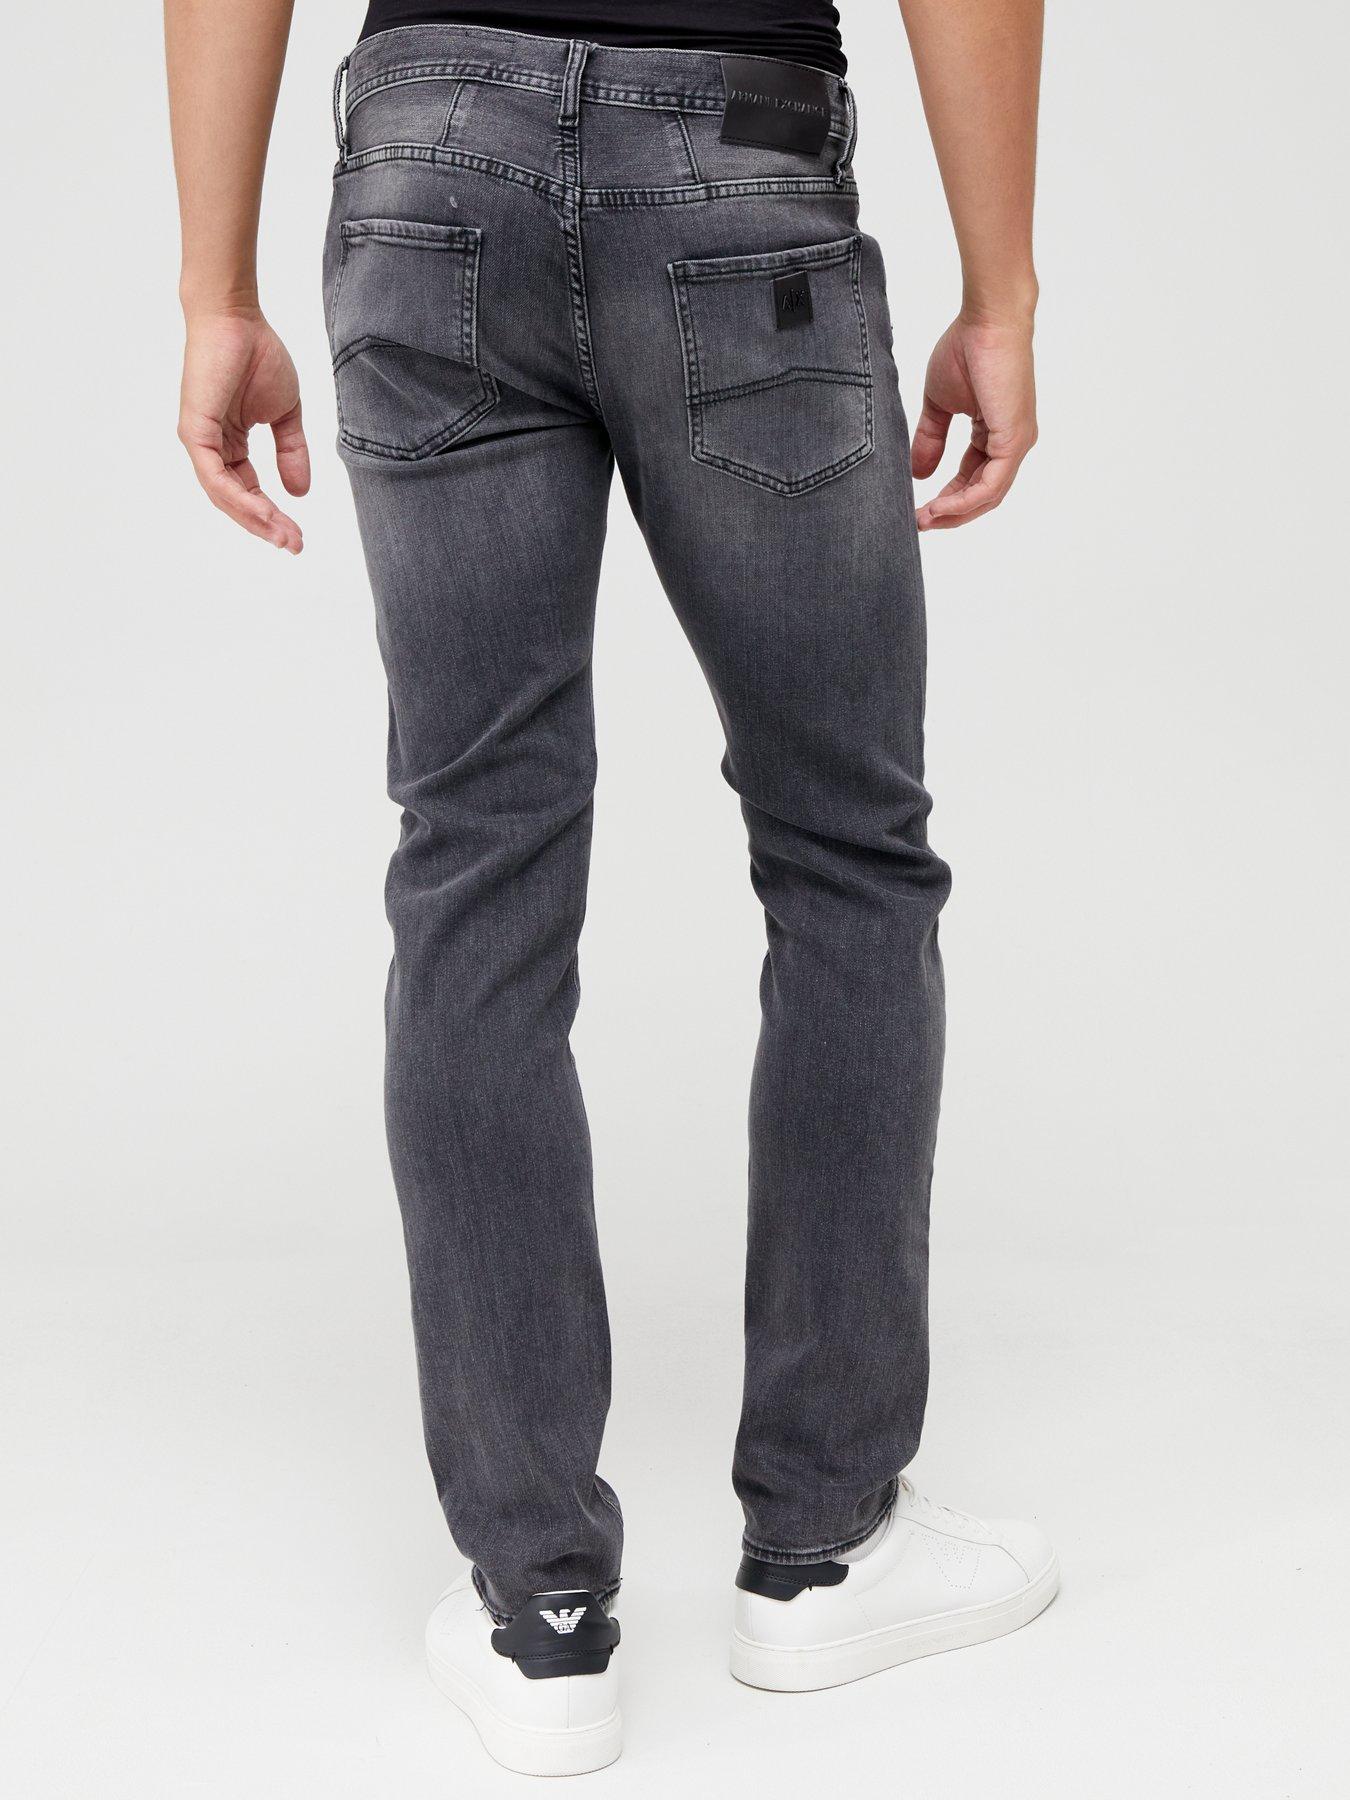 Armani Exchange J13 Slim Fit Jeans - Washed Grey 